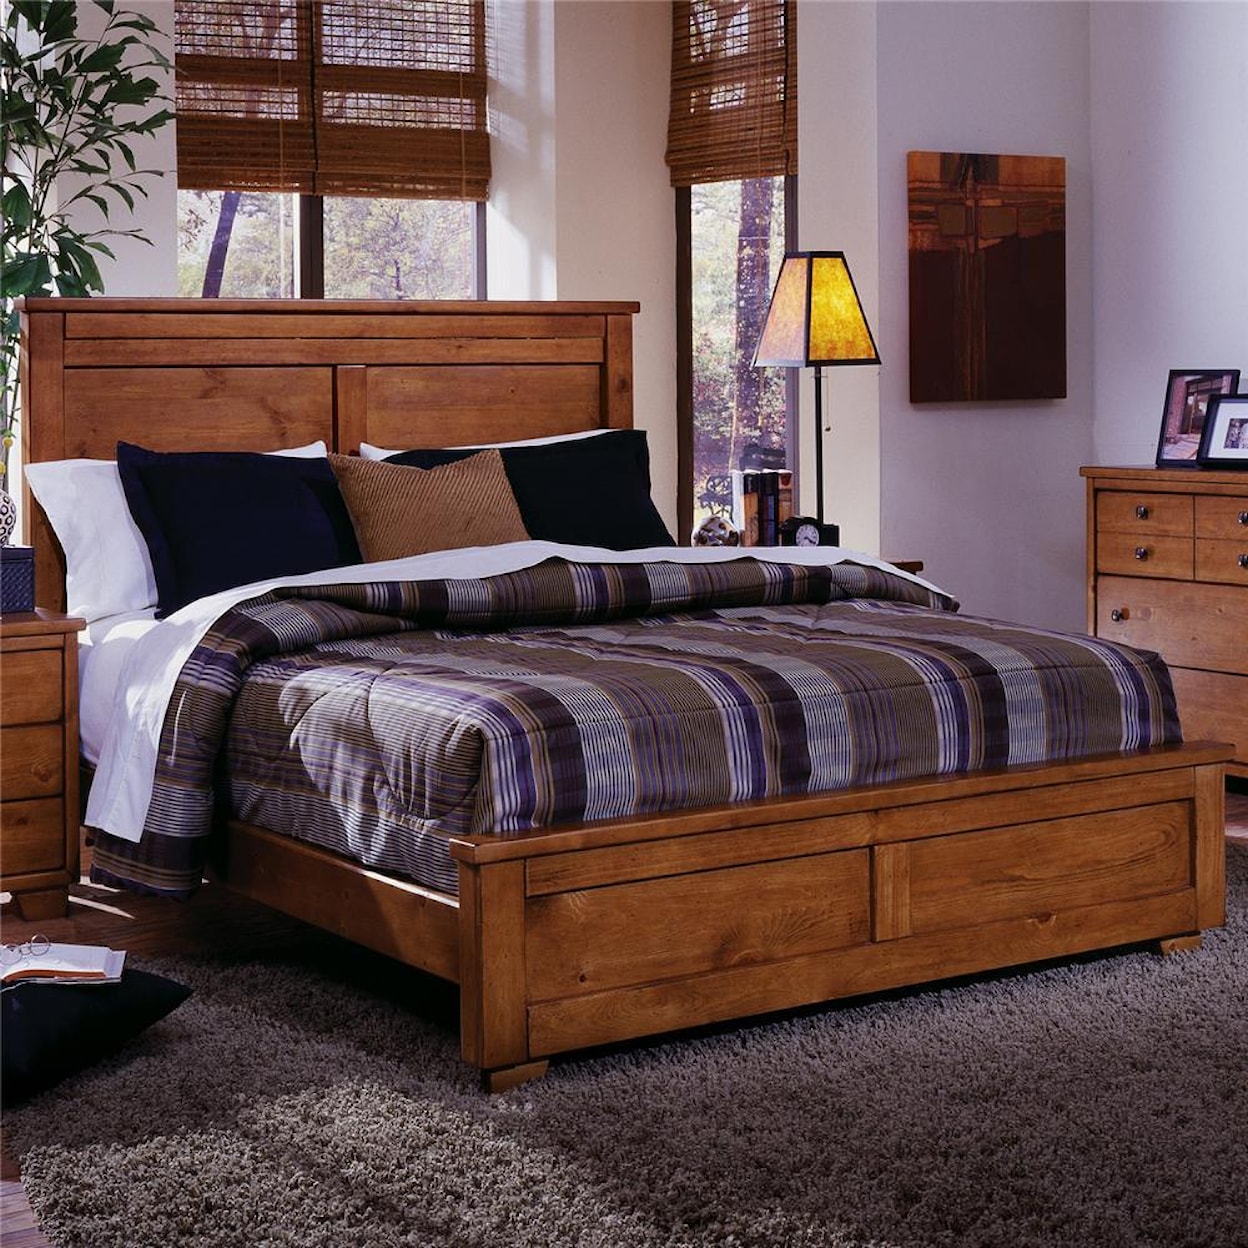 Progressive Furniture Diego King Panel Bed